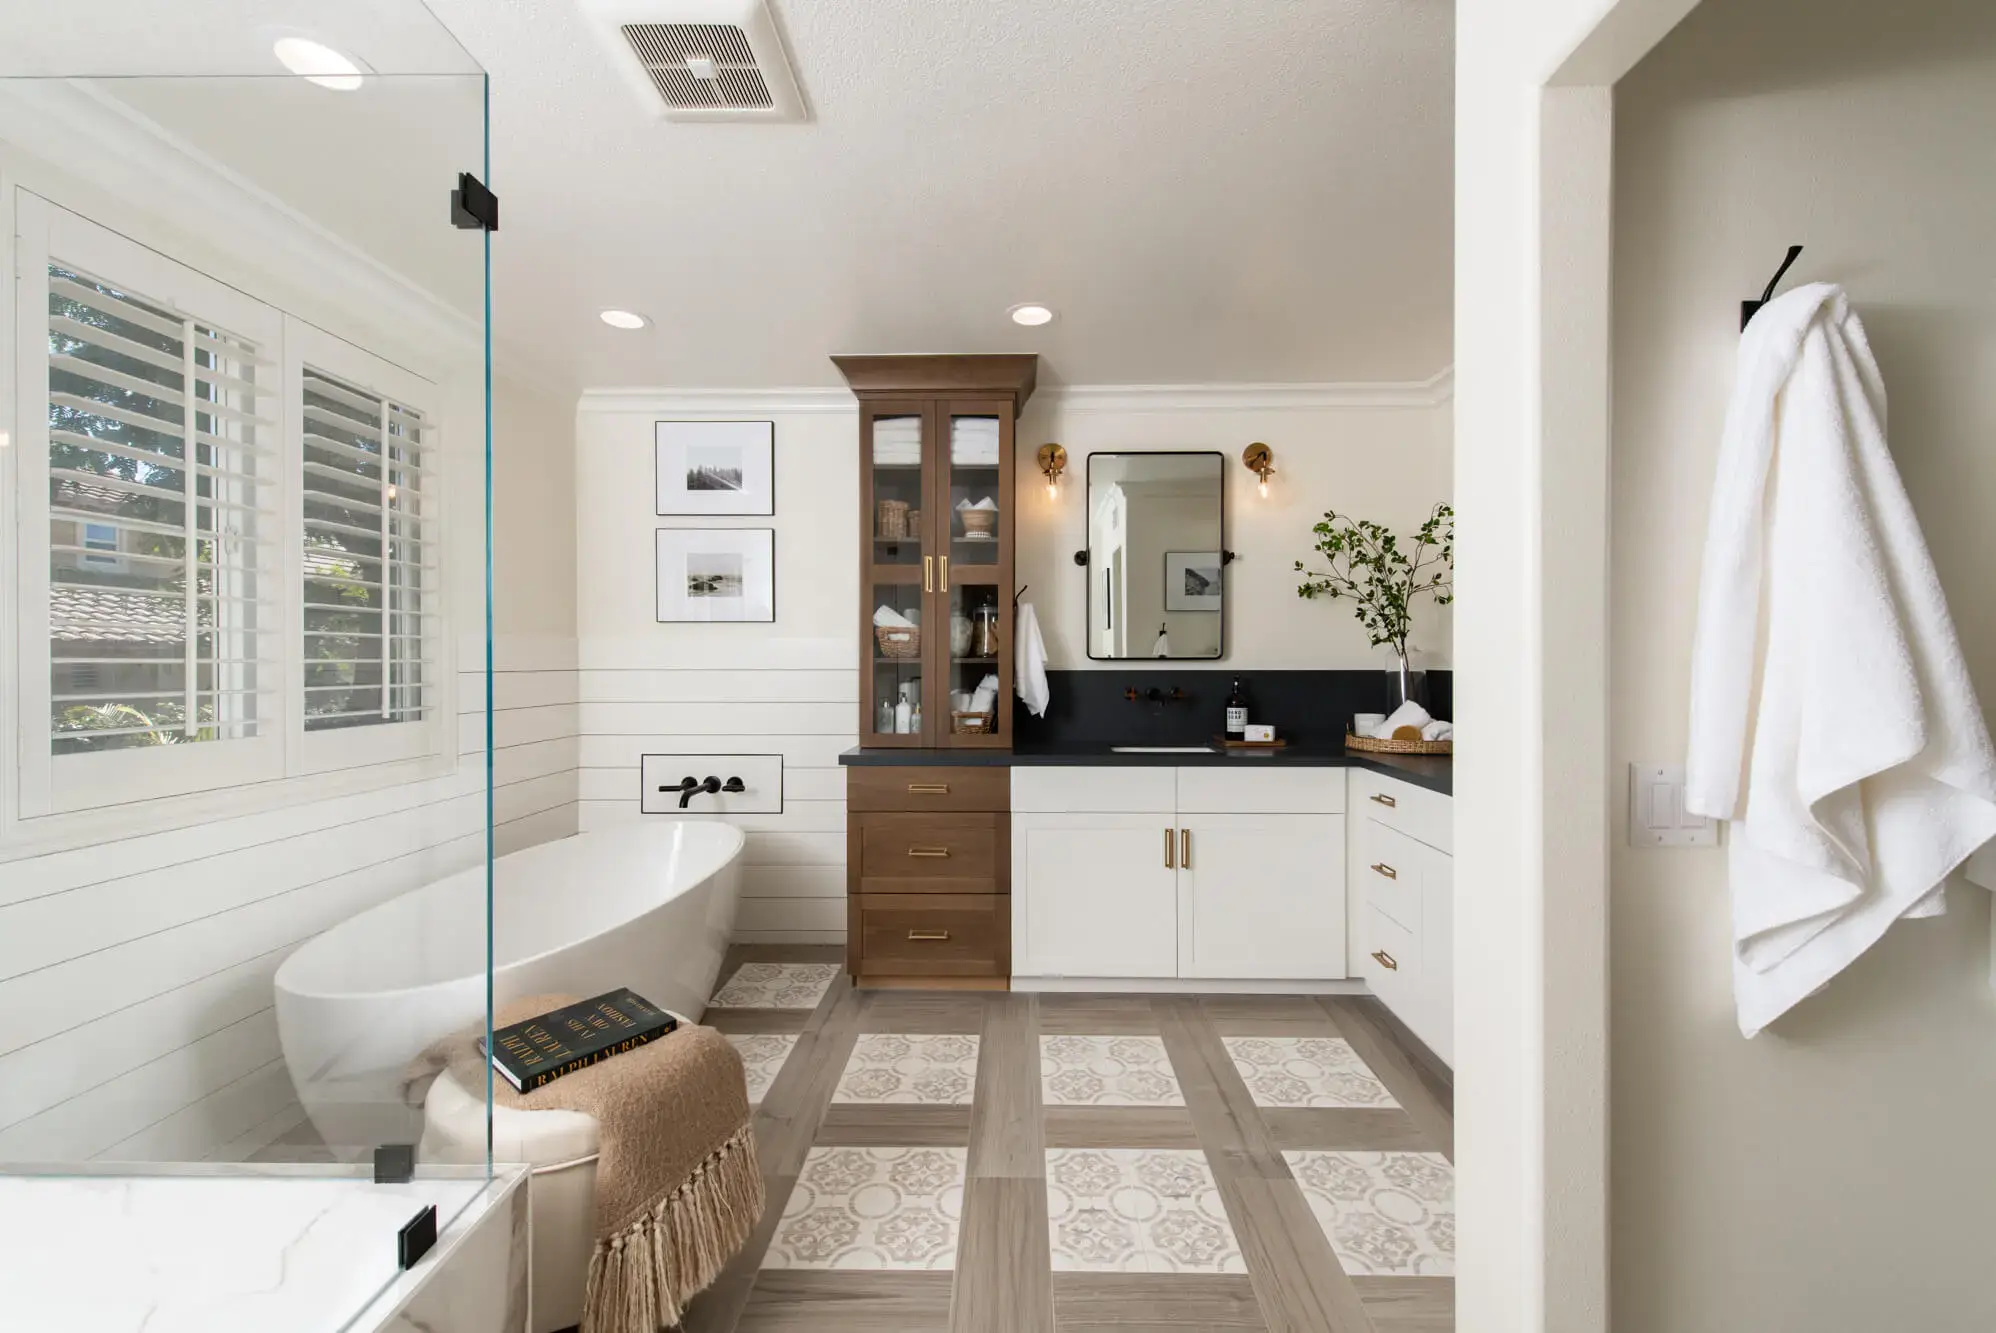 A unique floor tile design is a great innovative bathroom remodeling design idea.